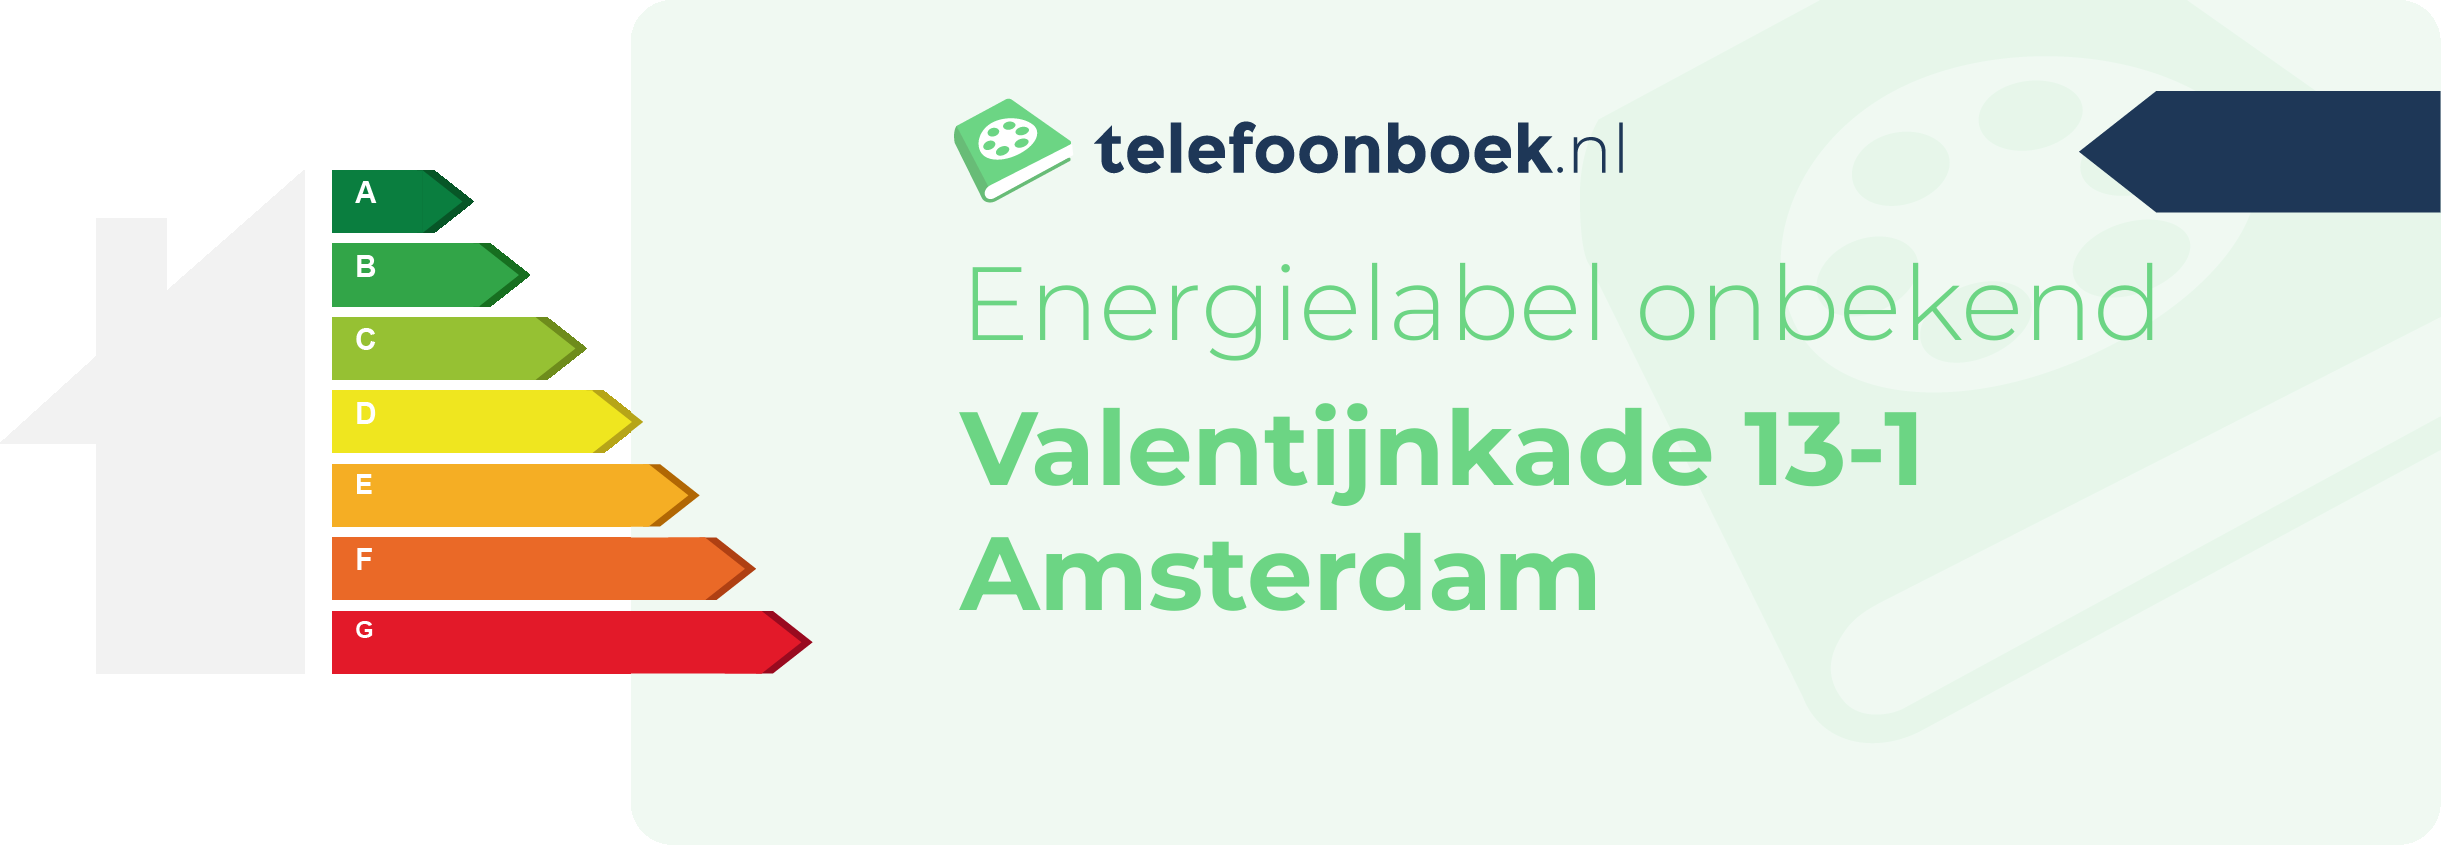 Energielabel Valentijnkade 13-1 Amsterdam